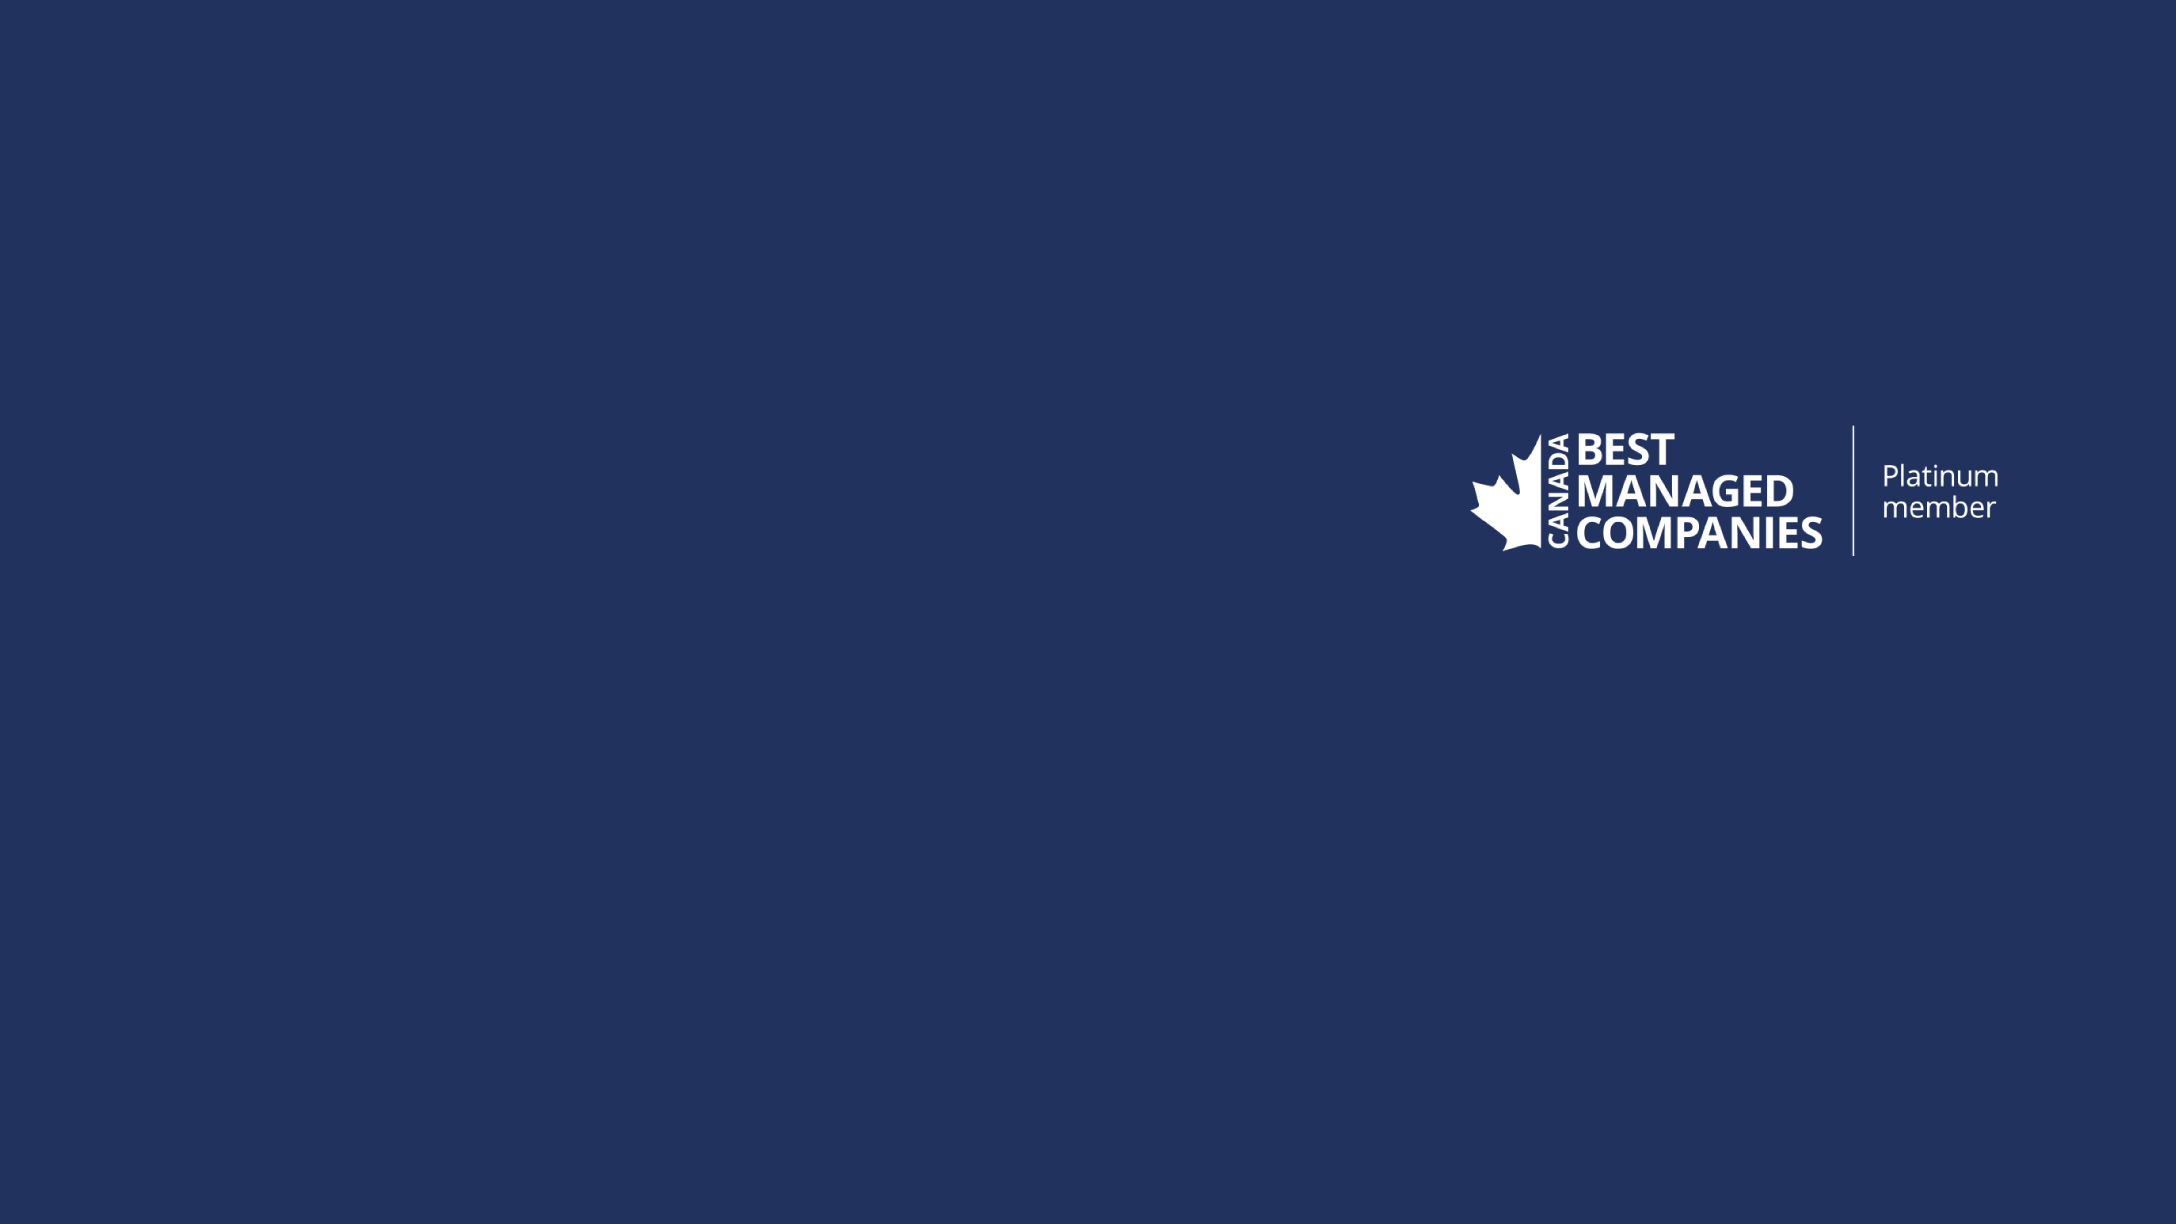  Canada Best Managed Companies Platinum Member logo on blue background